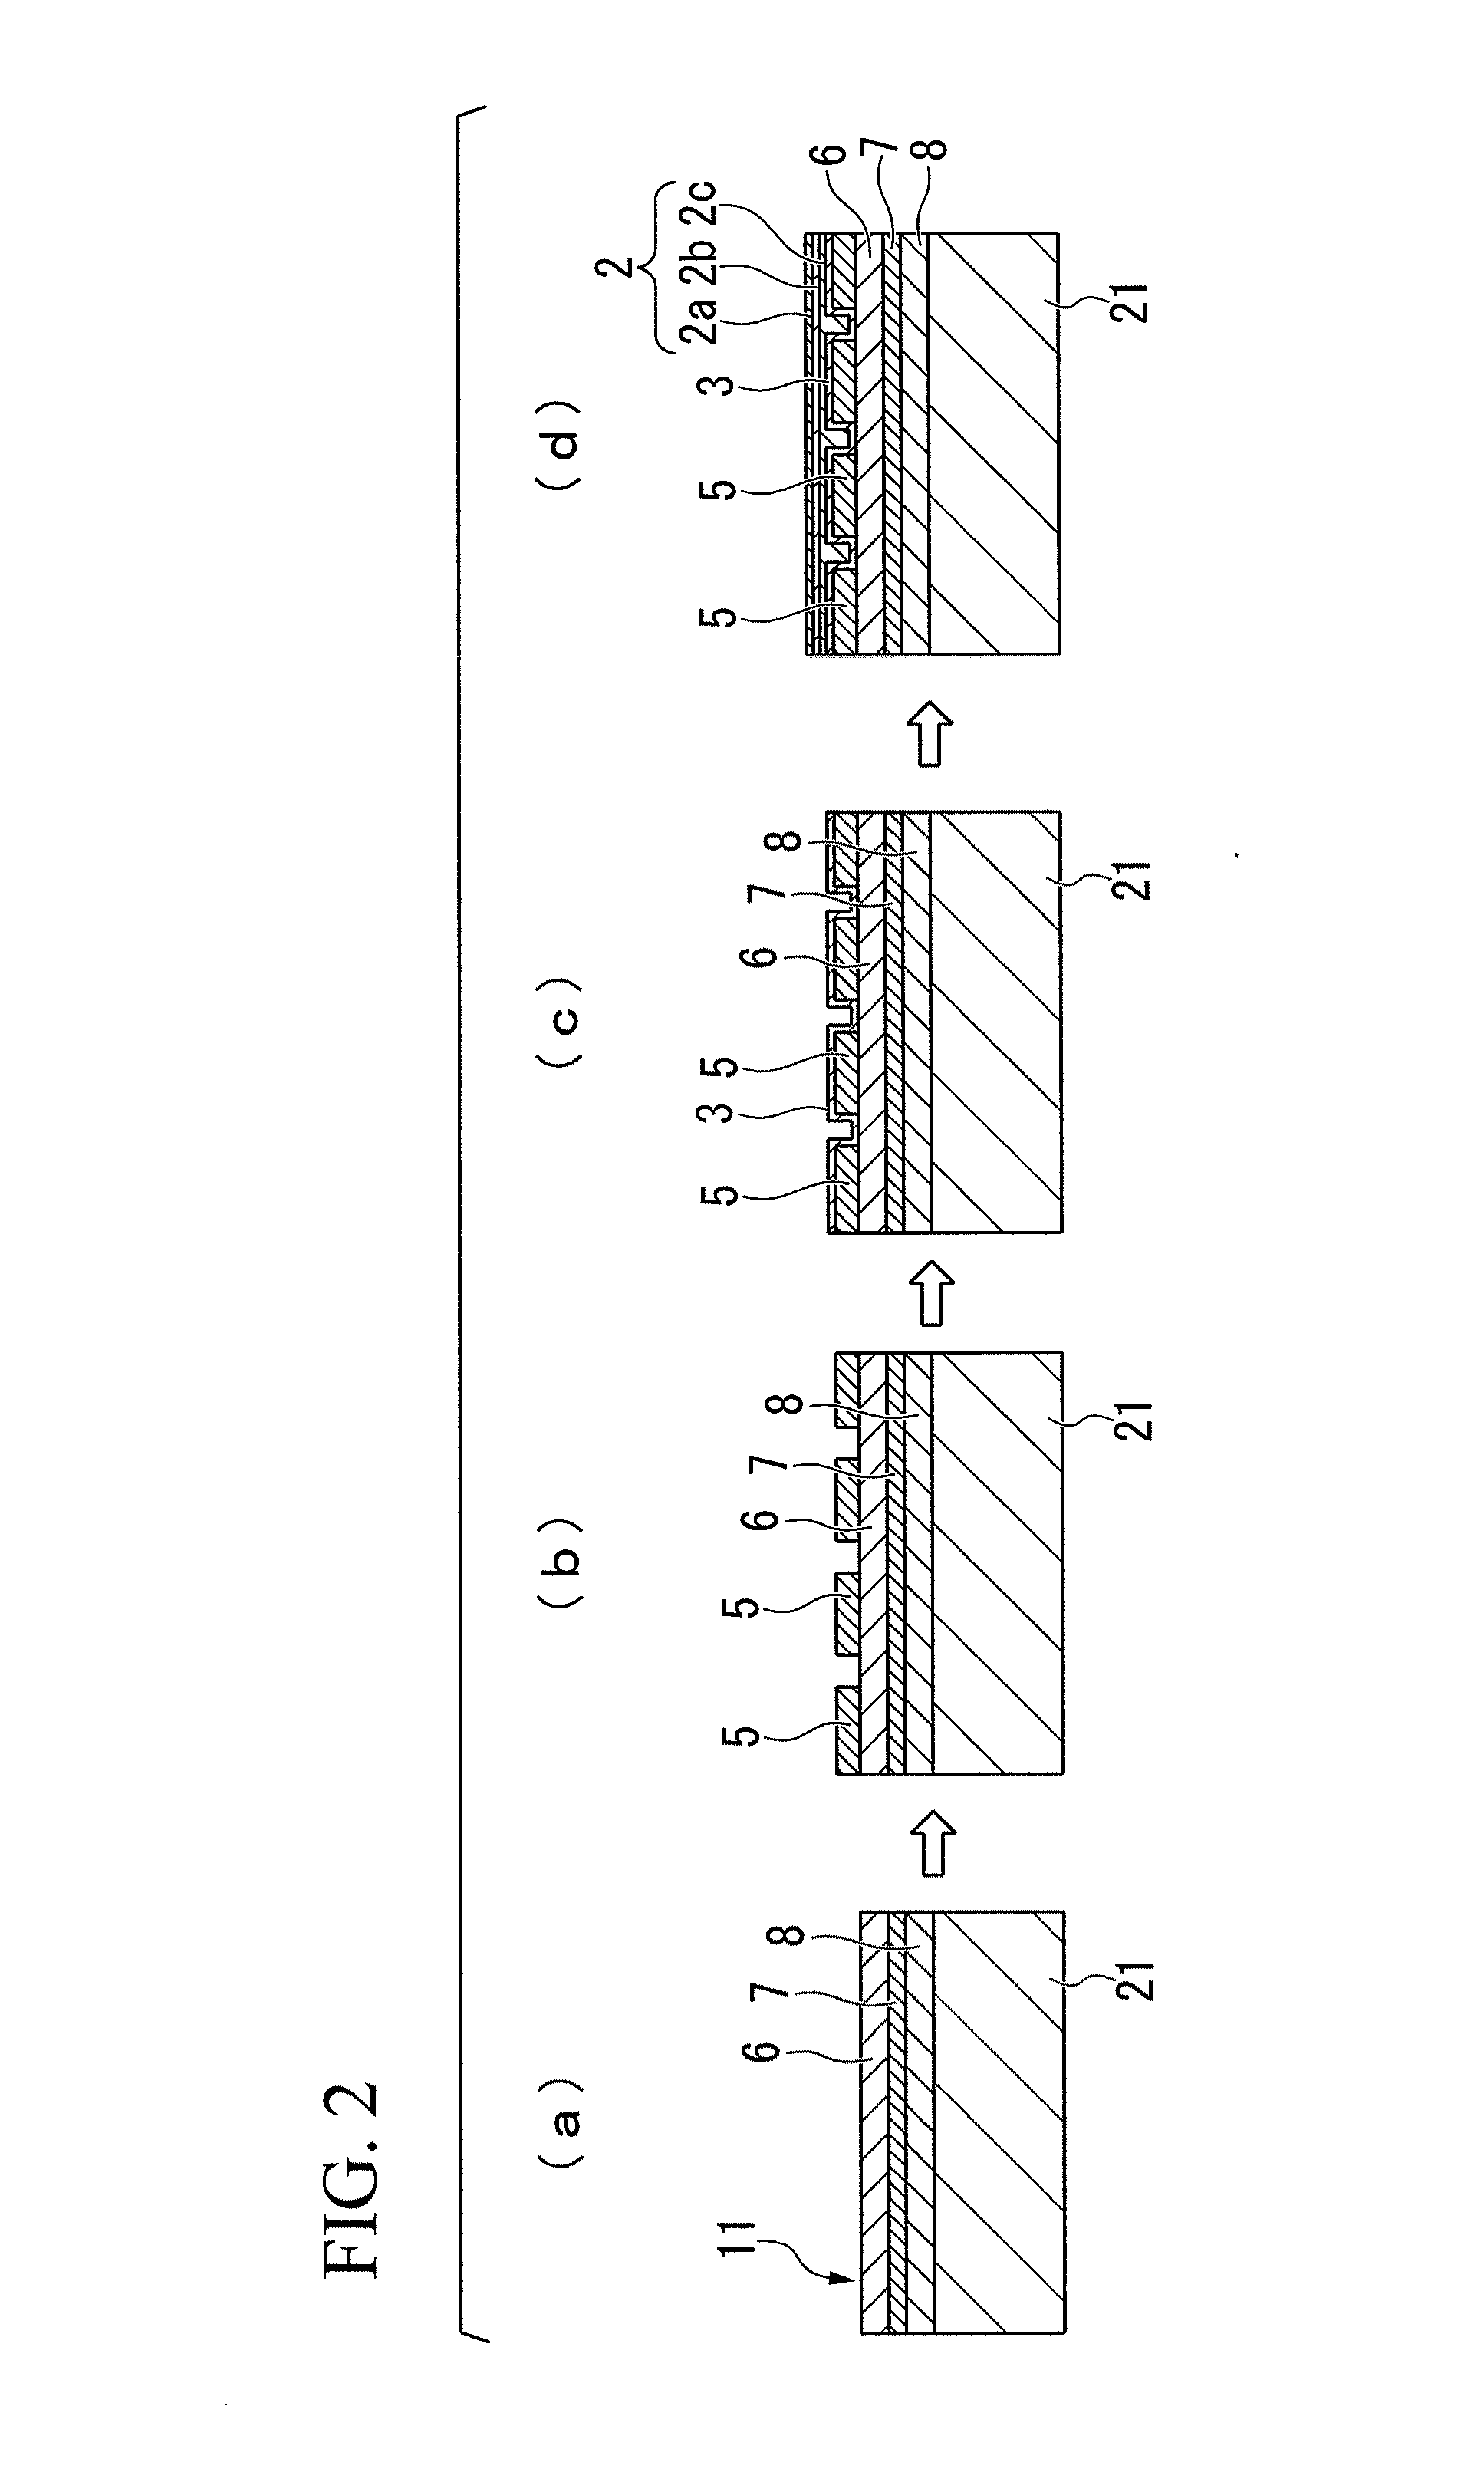 Method for producing light-emitting diode